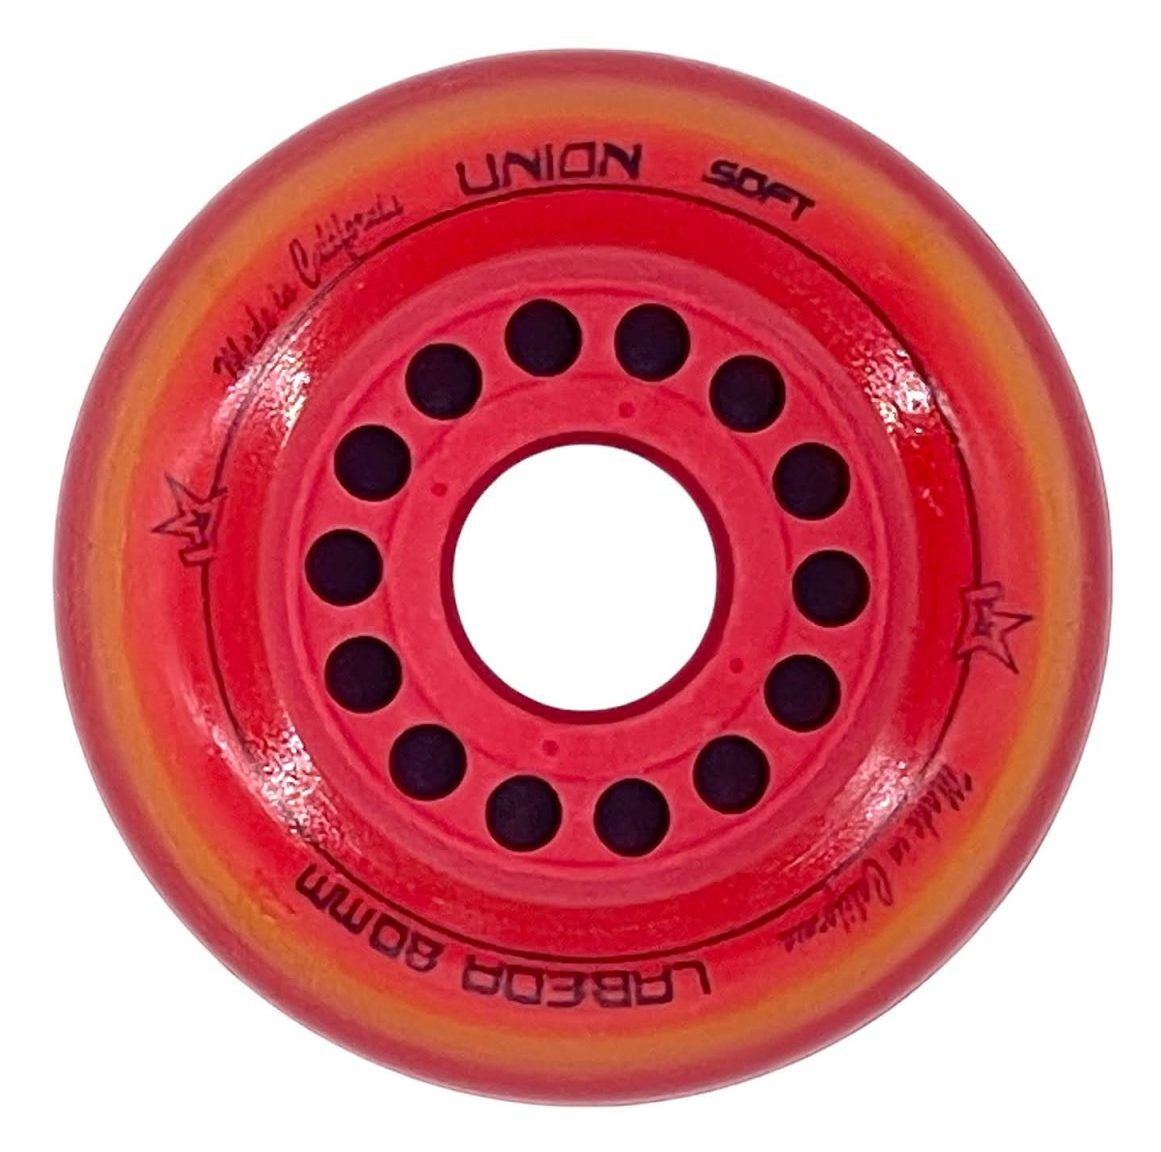 Labeda Roller Hockey Wheel Union Soft – Red